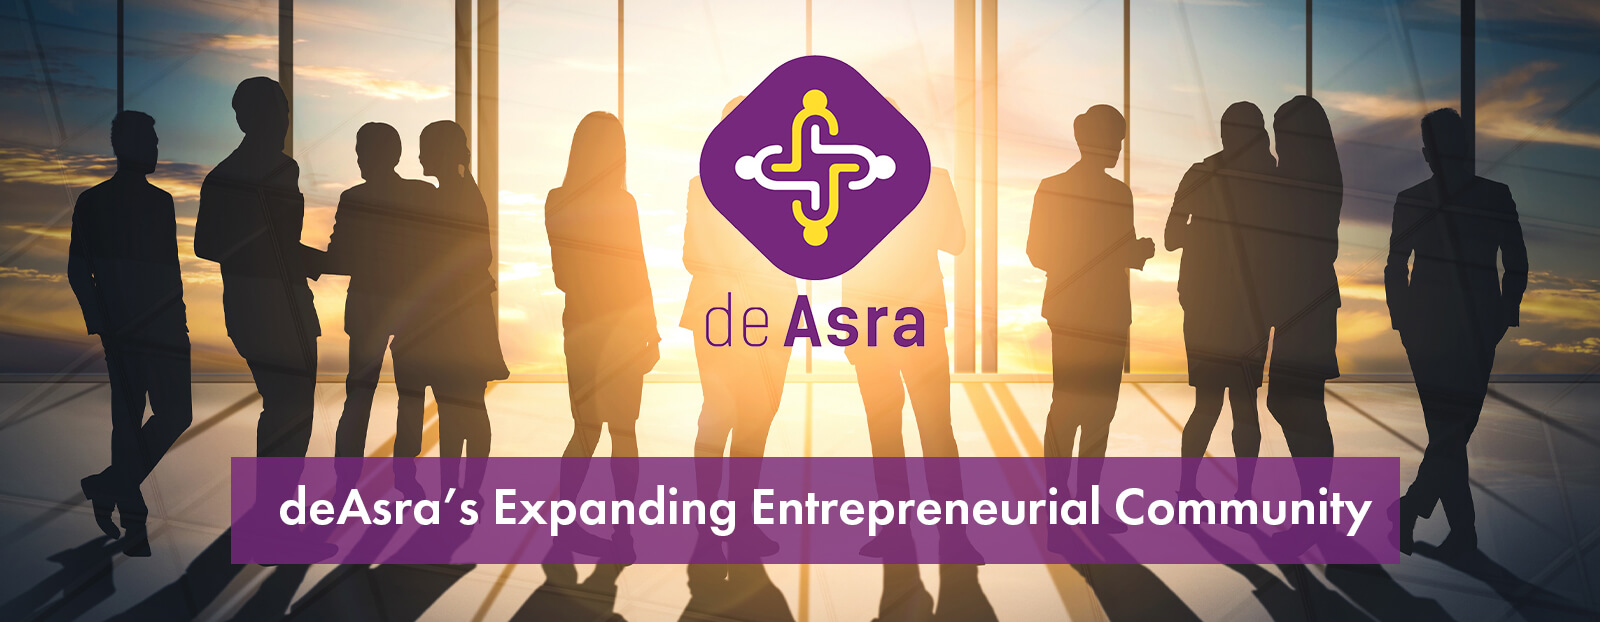 deAsra’s Expanding Entrepreneurial Community